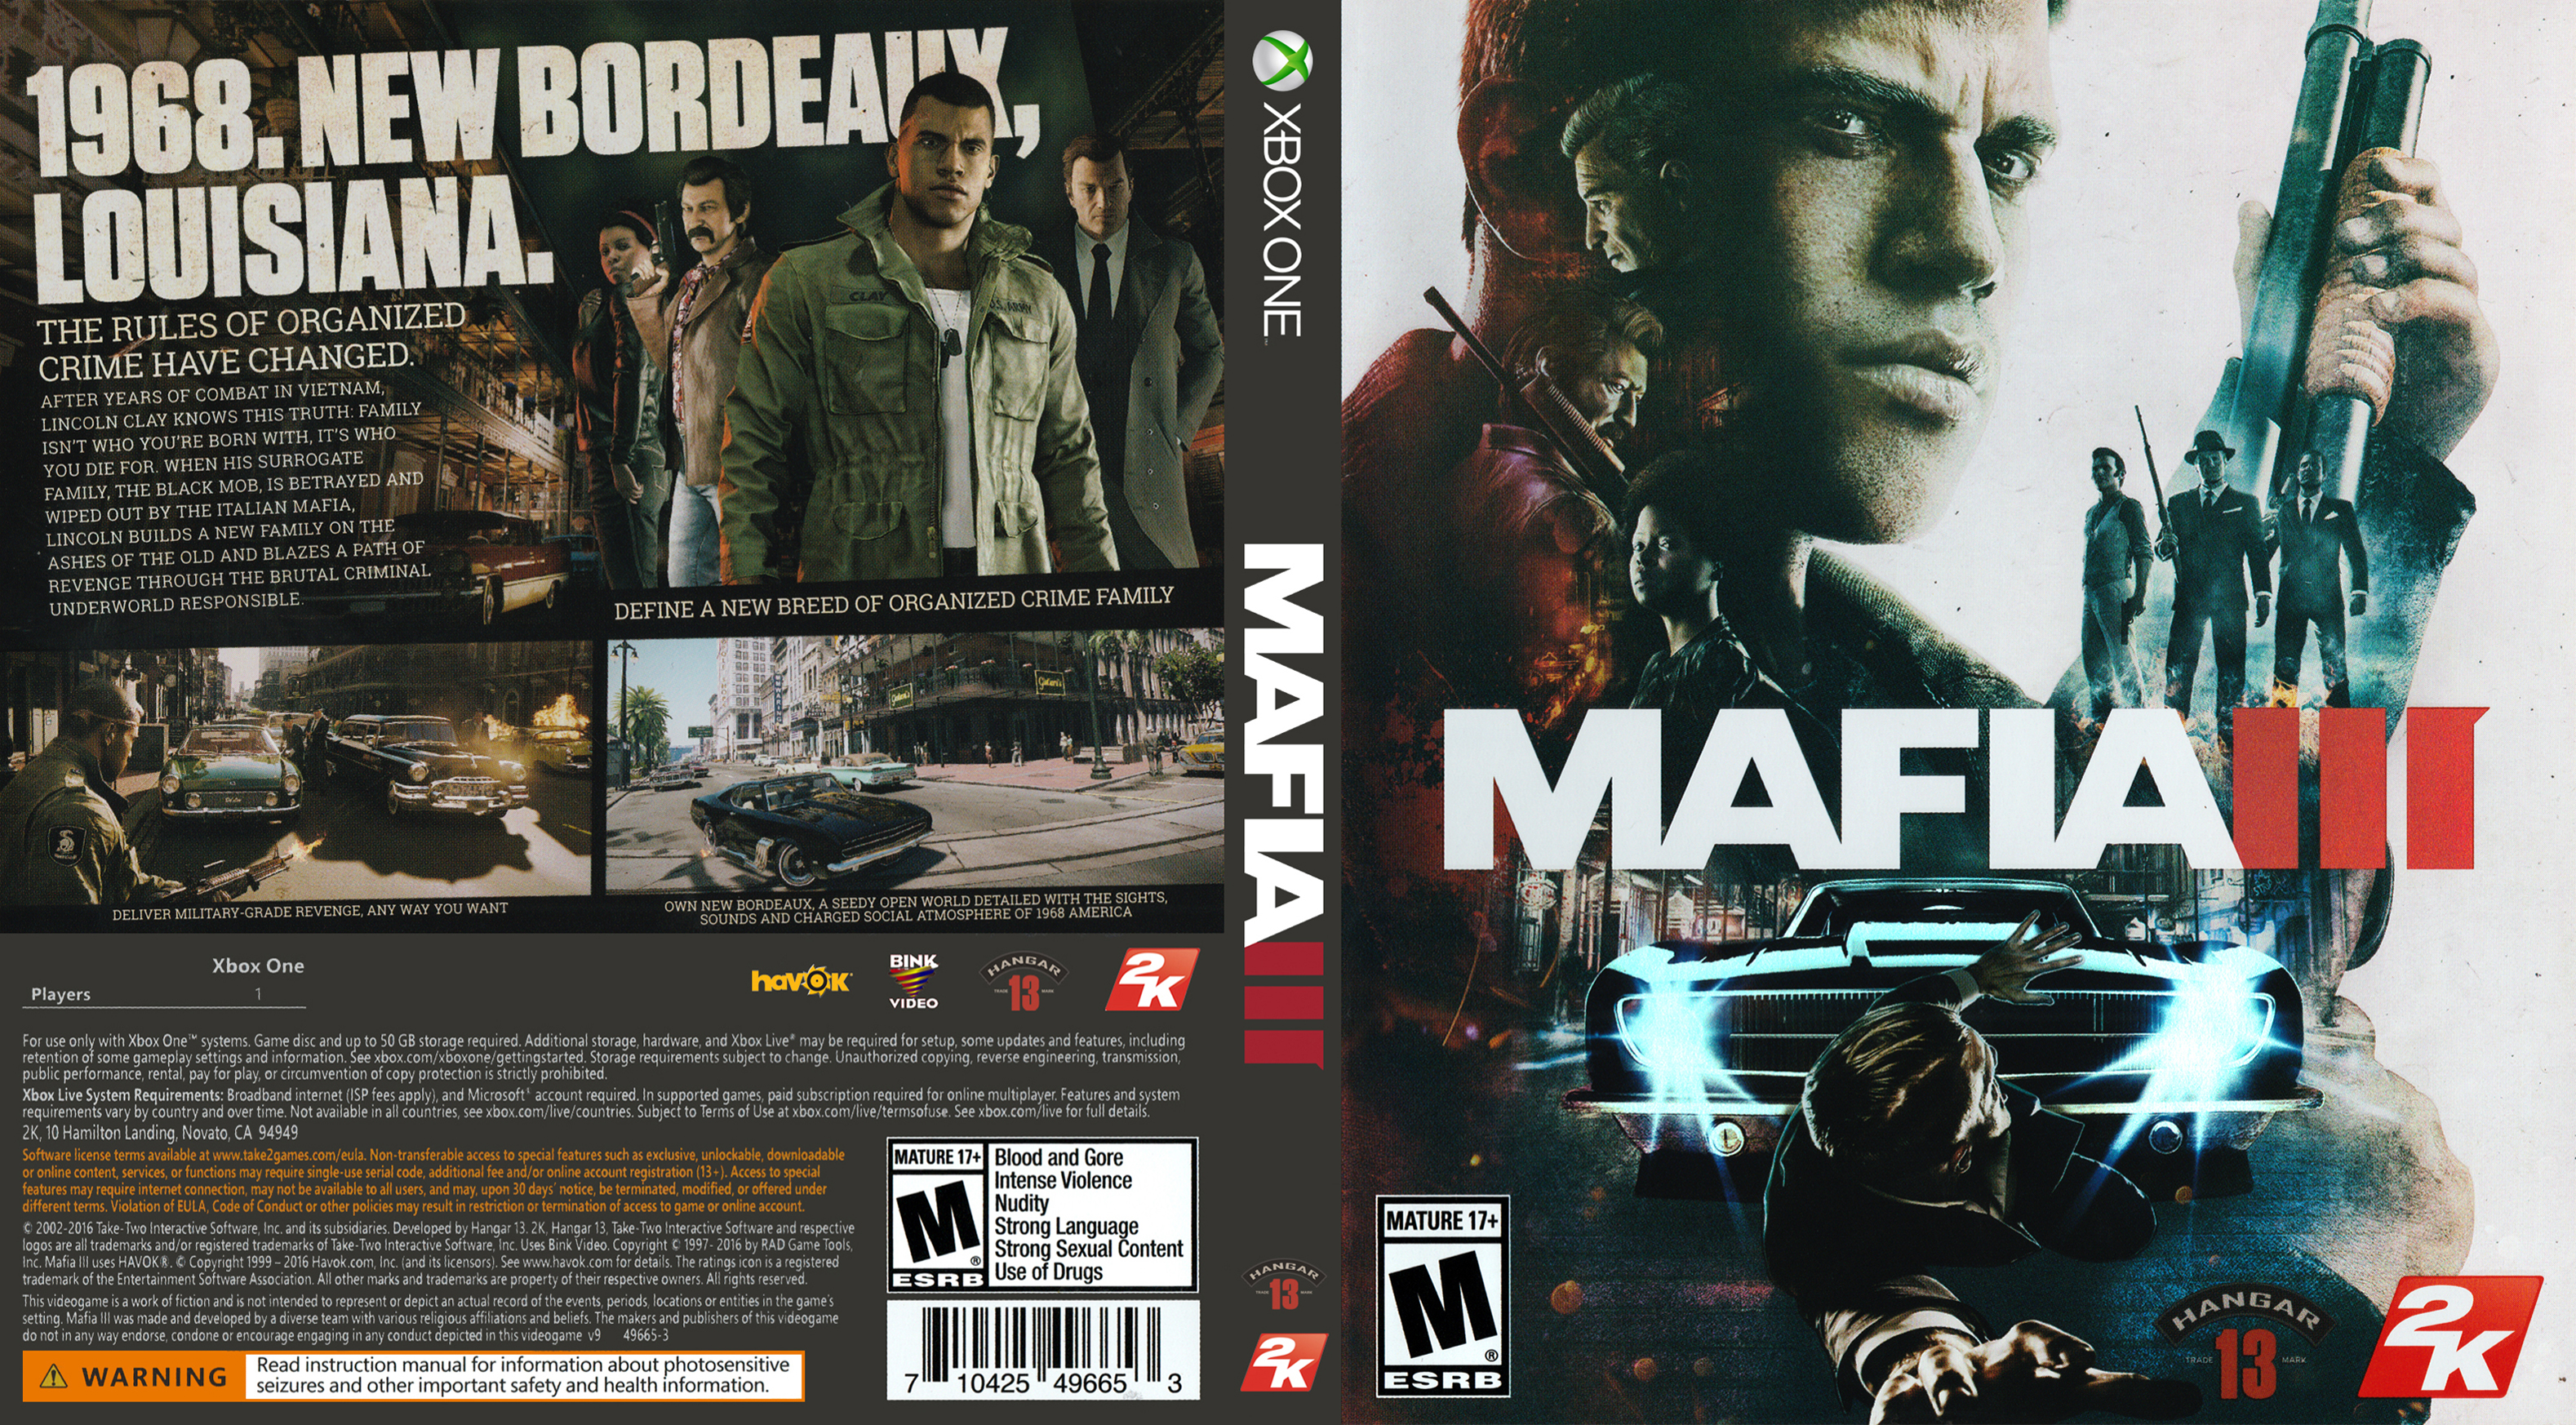 Mafia 3 Theme [2] - PS3 Themes